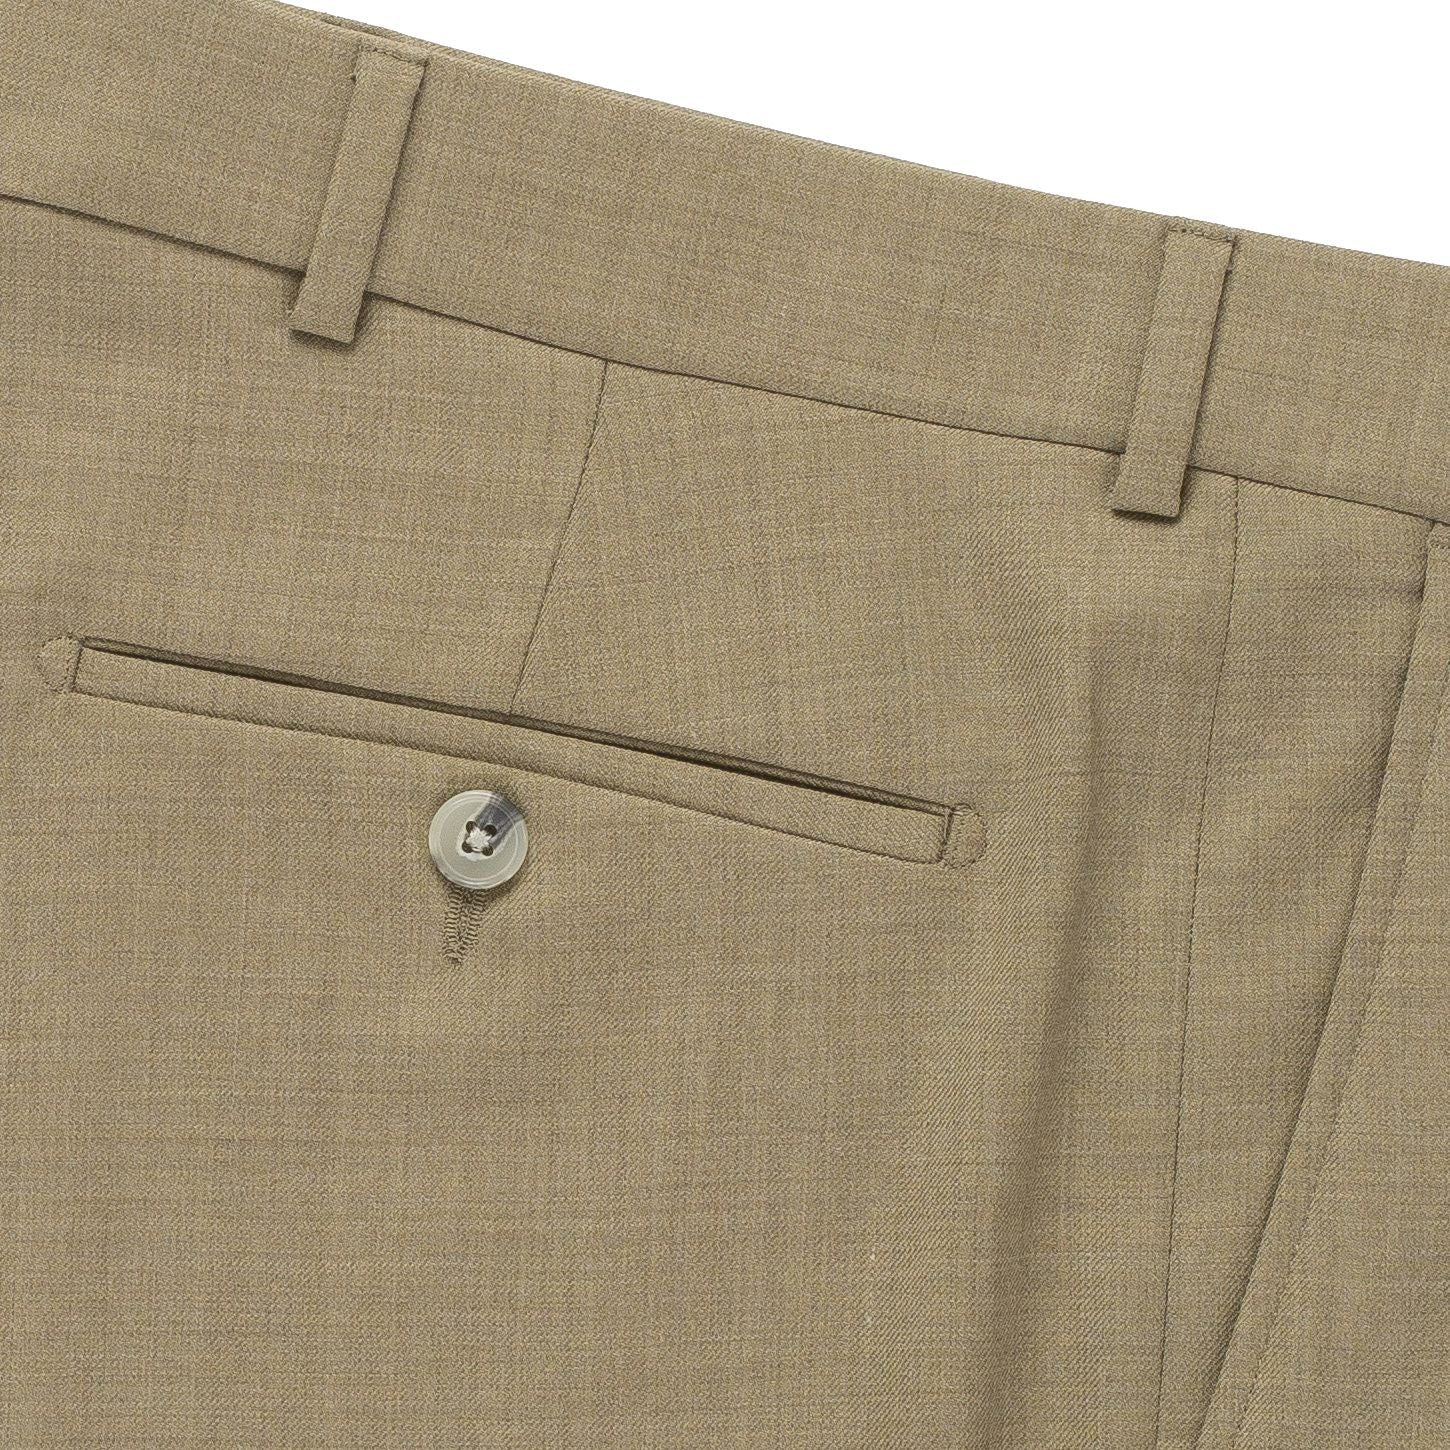 Super 120s Luxury Wool Serge Comfort-EZE Trouser in Tan (Flat Front Models) by Ballin